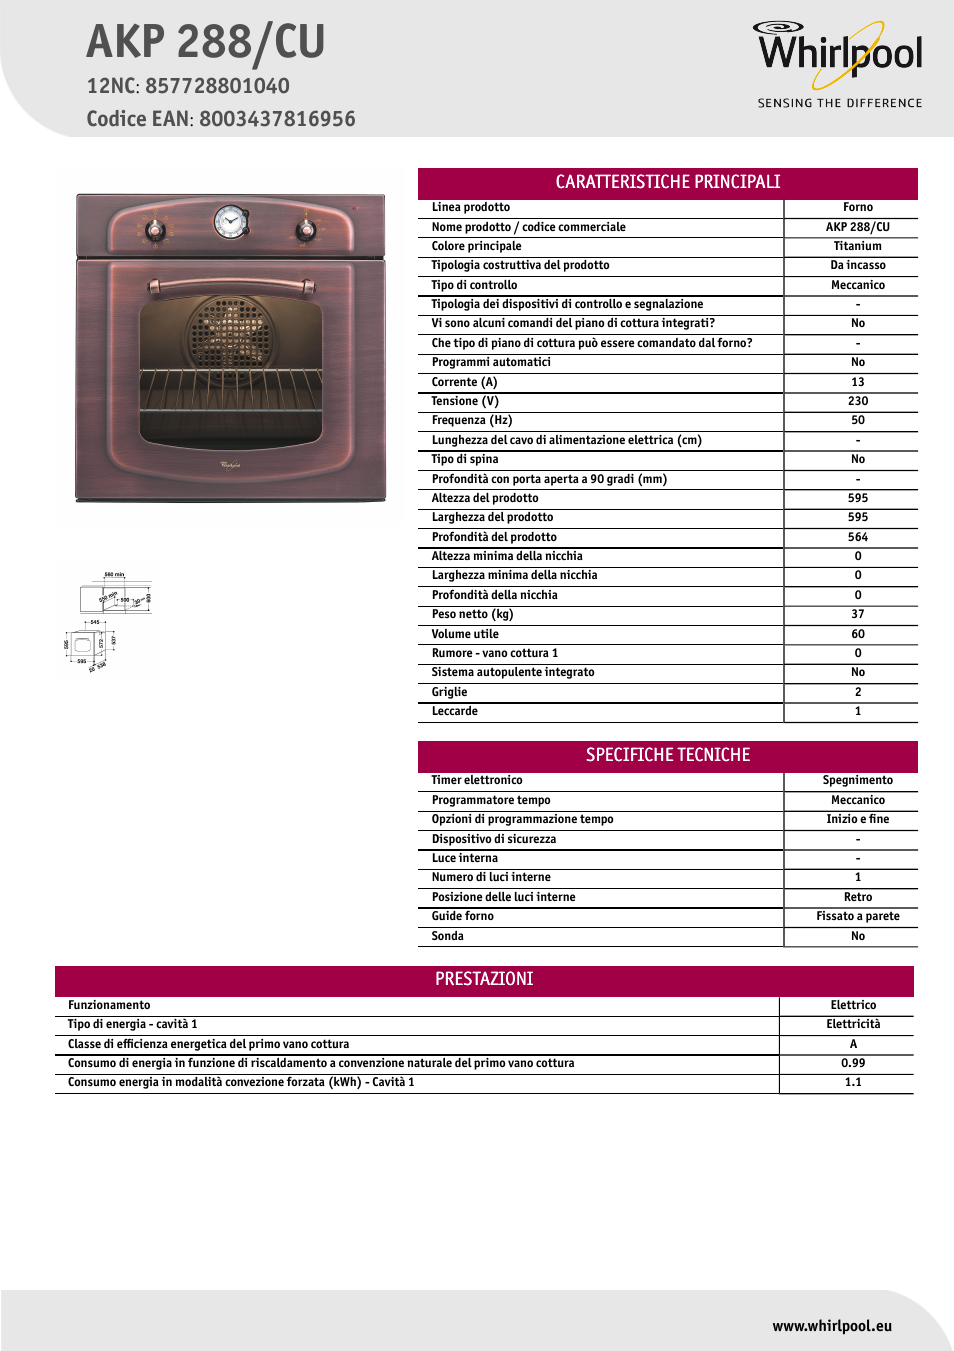 Whirlpool AKP 288-CU Manuale d'uso | Pagine: 1